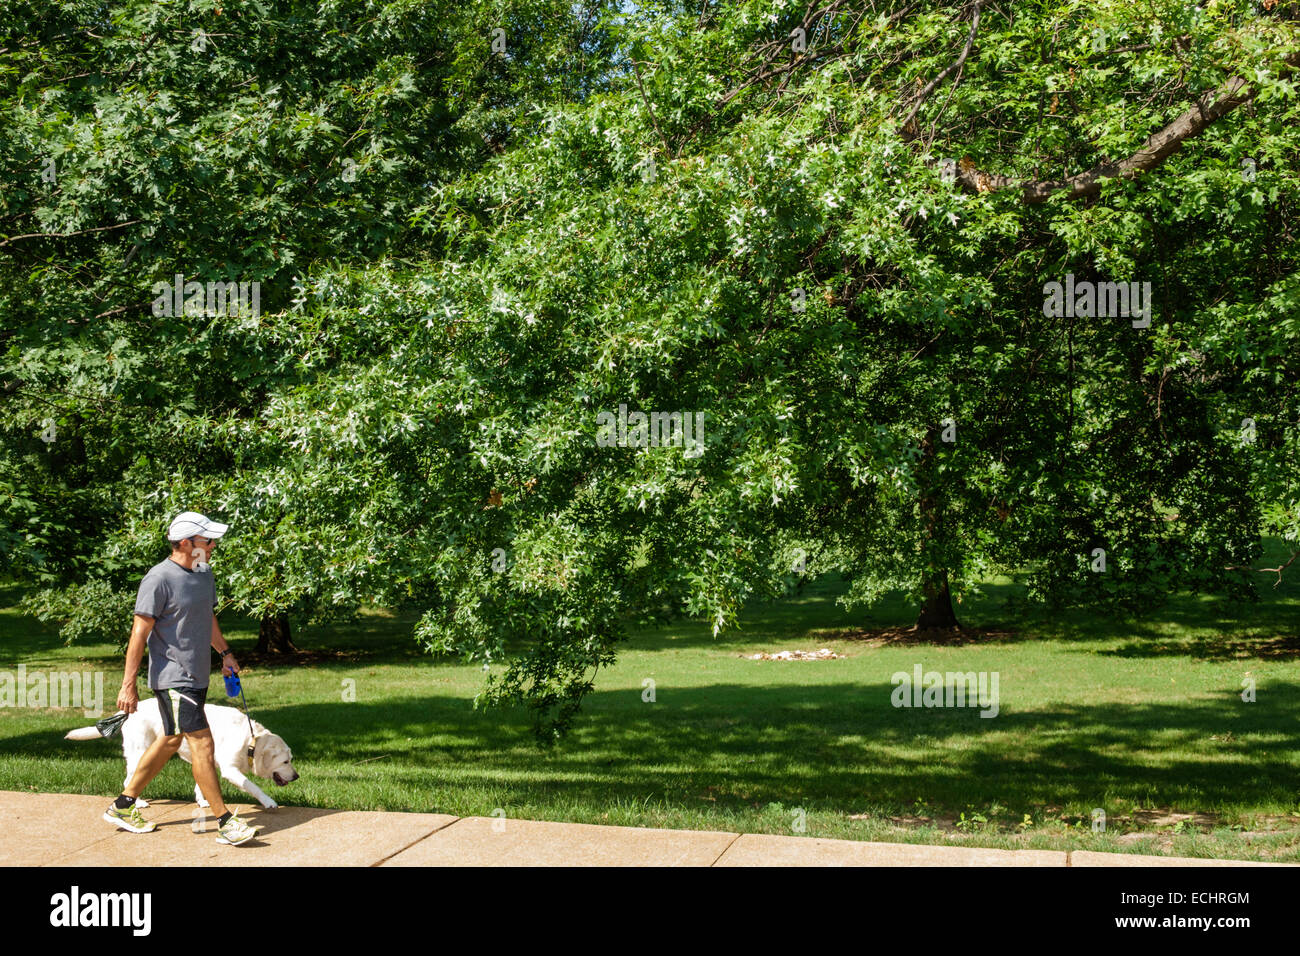 Saint St. Louis Missouri,Hi-Pointe,De Mun Historic District,neighborhood,Concordia Park,lawn,trees,green space,man men male,dog,leash,walking,MO140831 Stock Photo